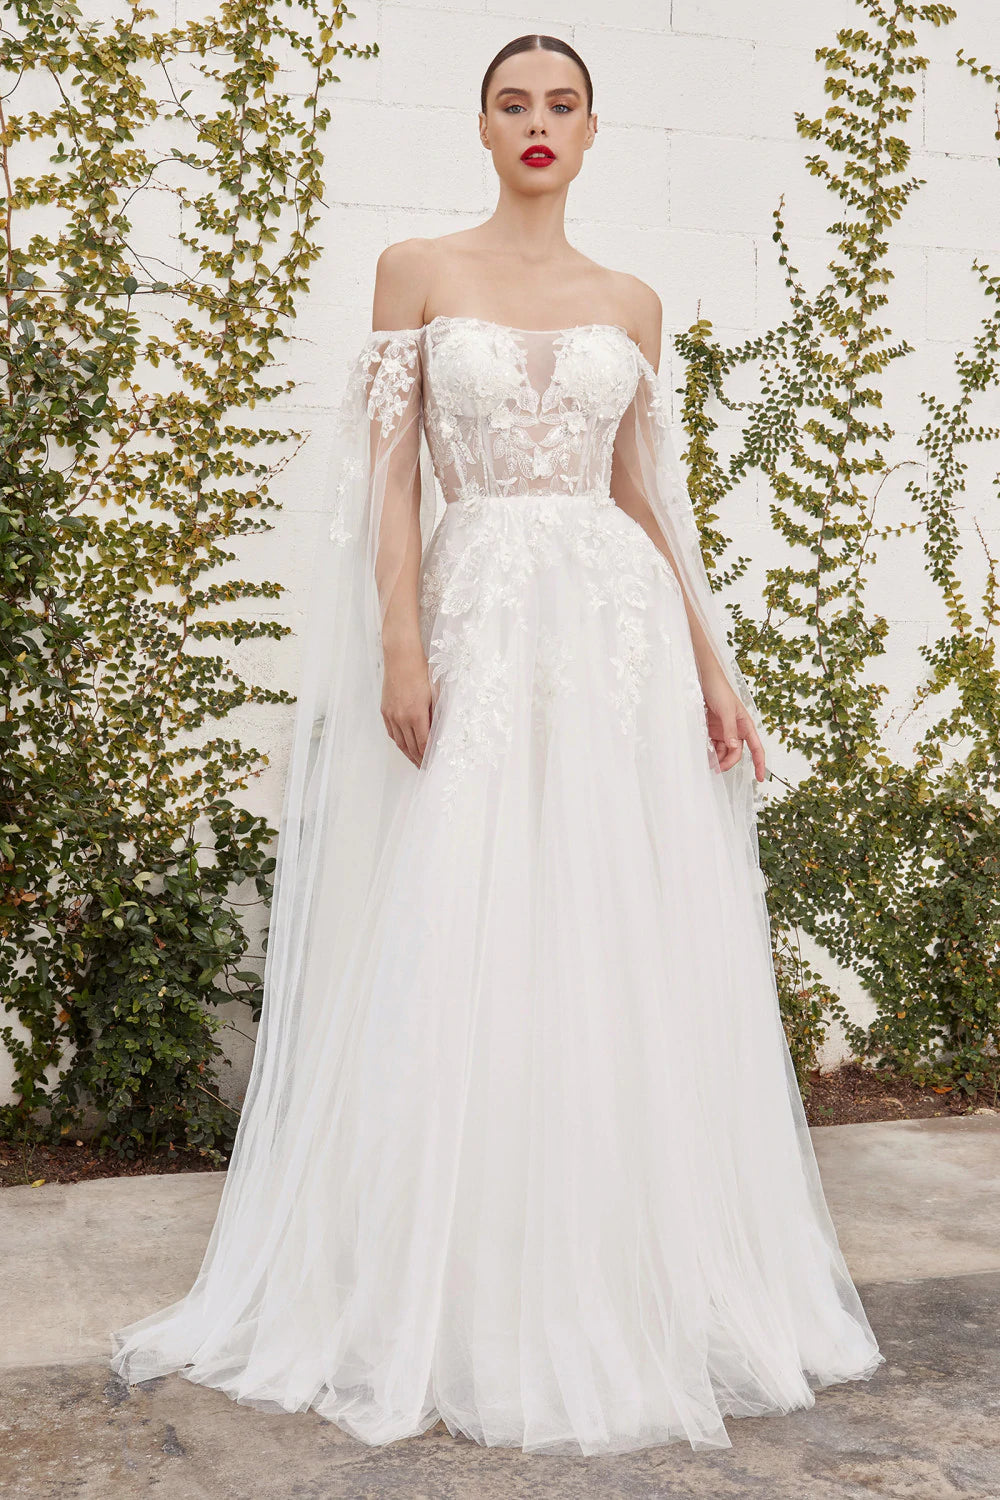 Detachable Sleeves Wedding Dress, Wedding Dress Cape, Two in One